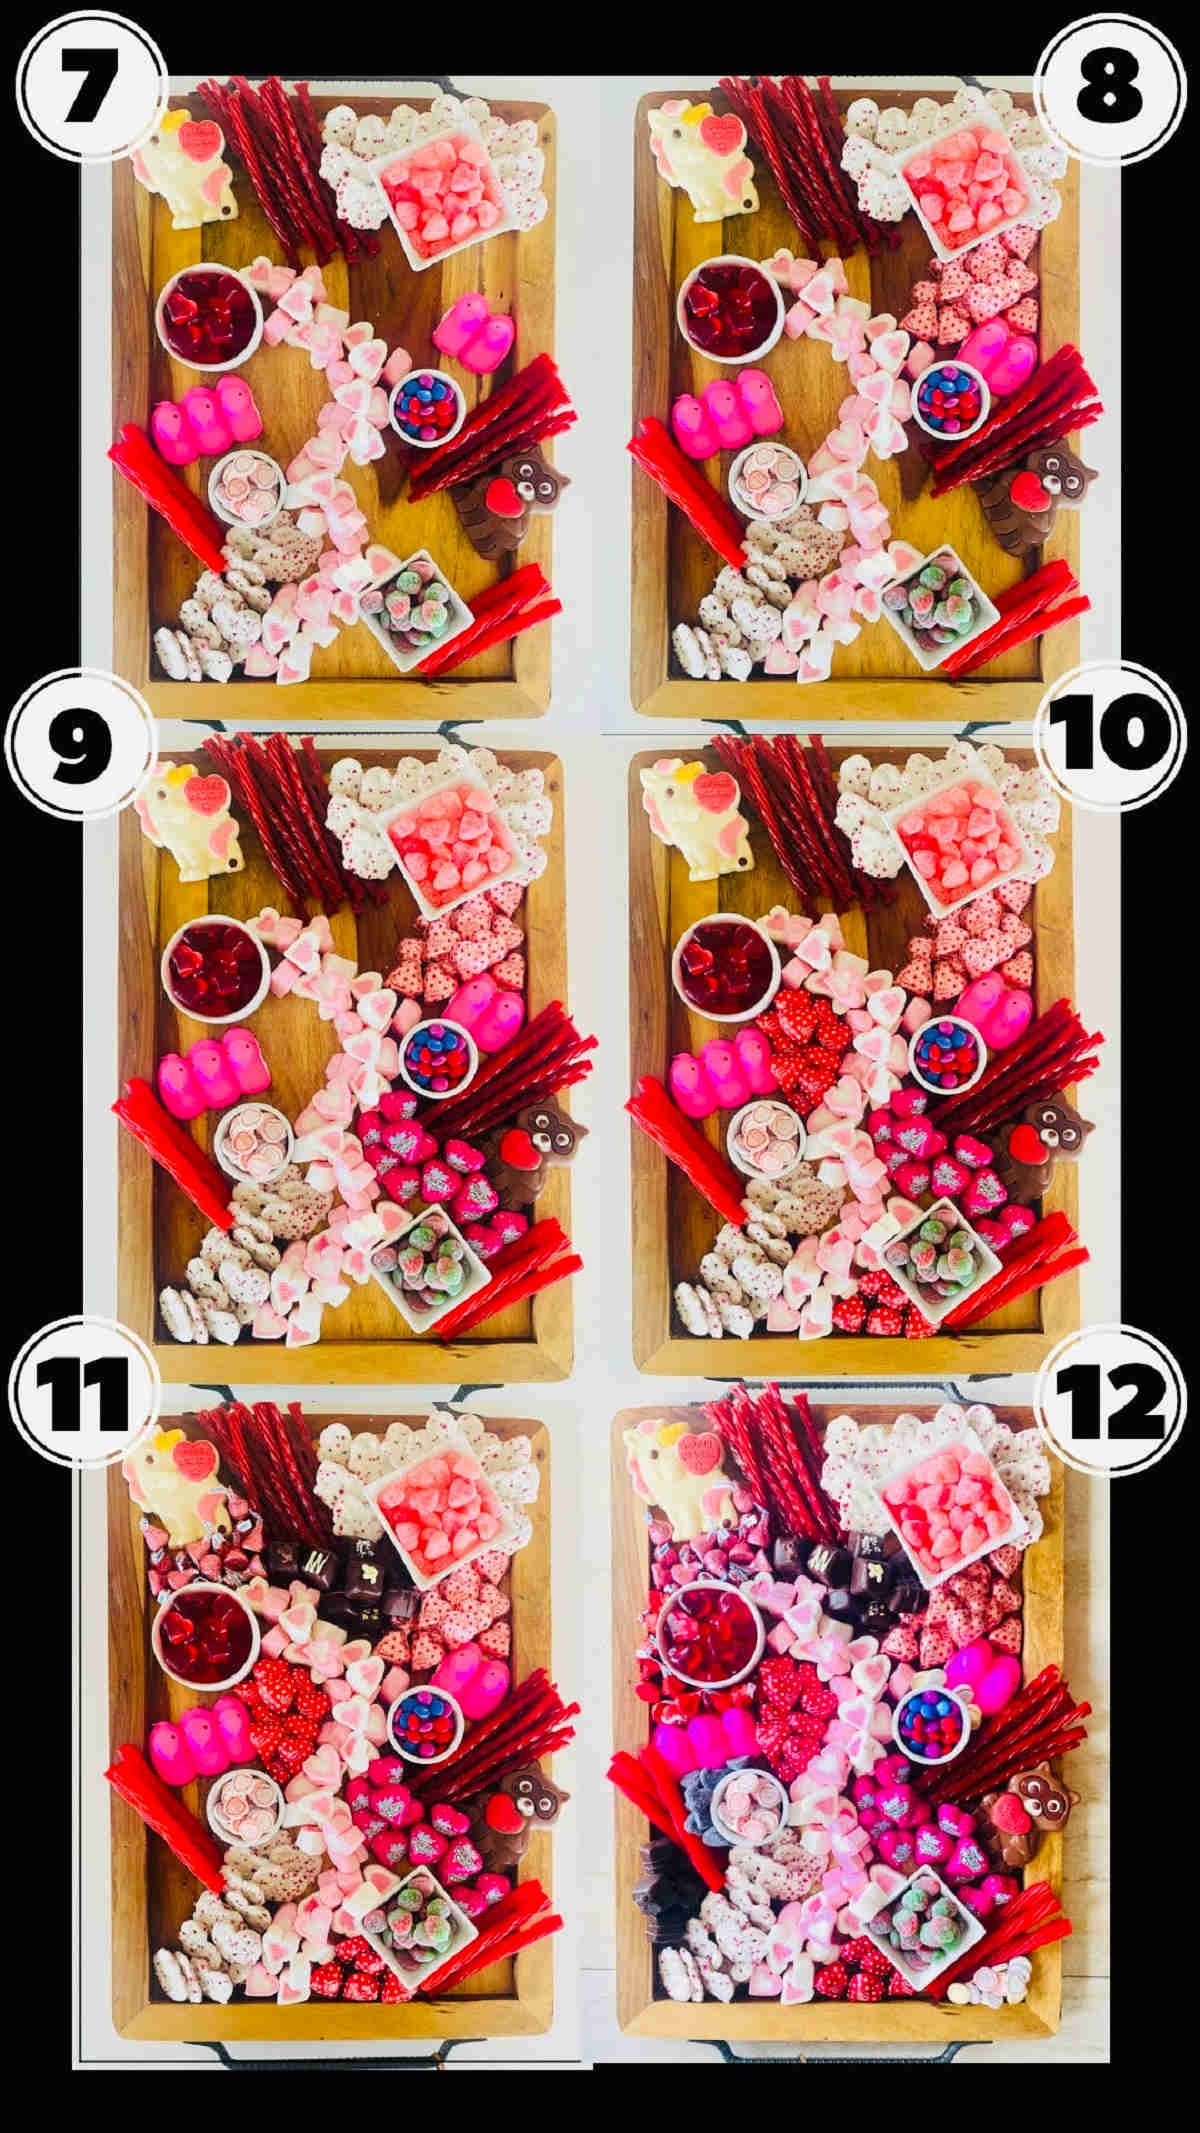 Valentine's Charcuterie Board process shots 7 through 12.